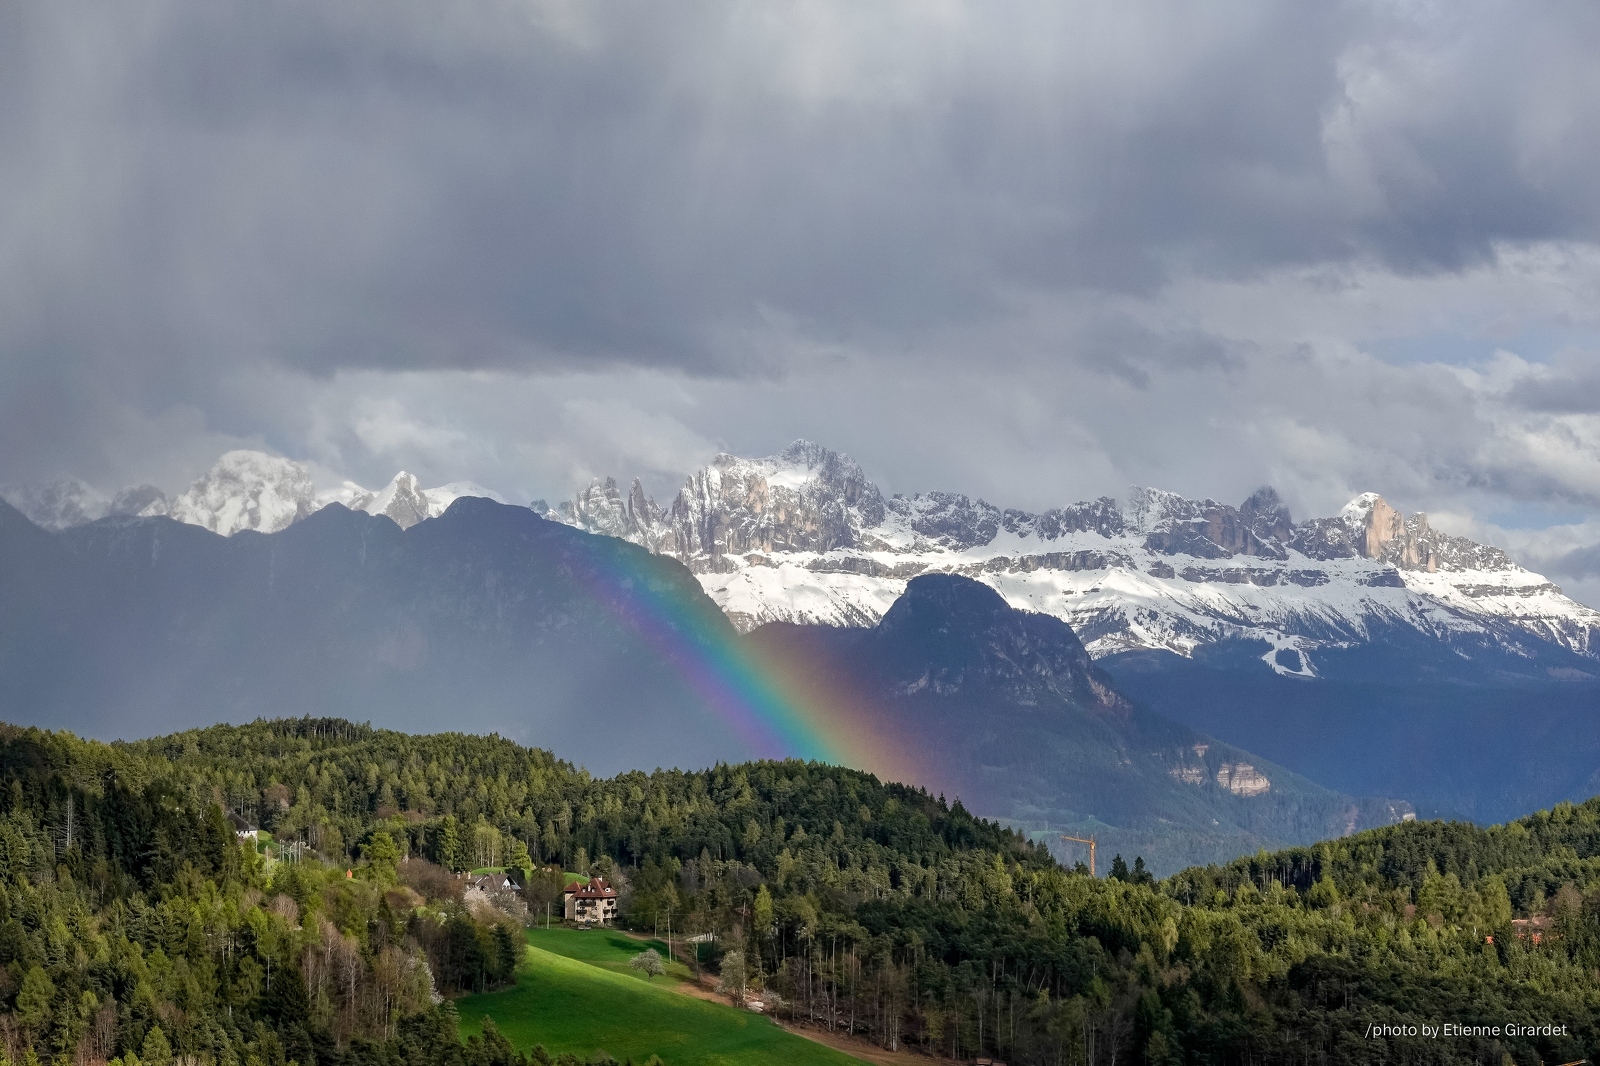 201904_26_RXX2857-snow-mountain-forest-rainbow-by-E-Girardet.jpg